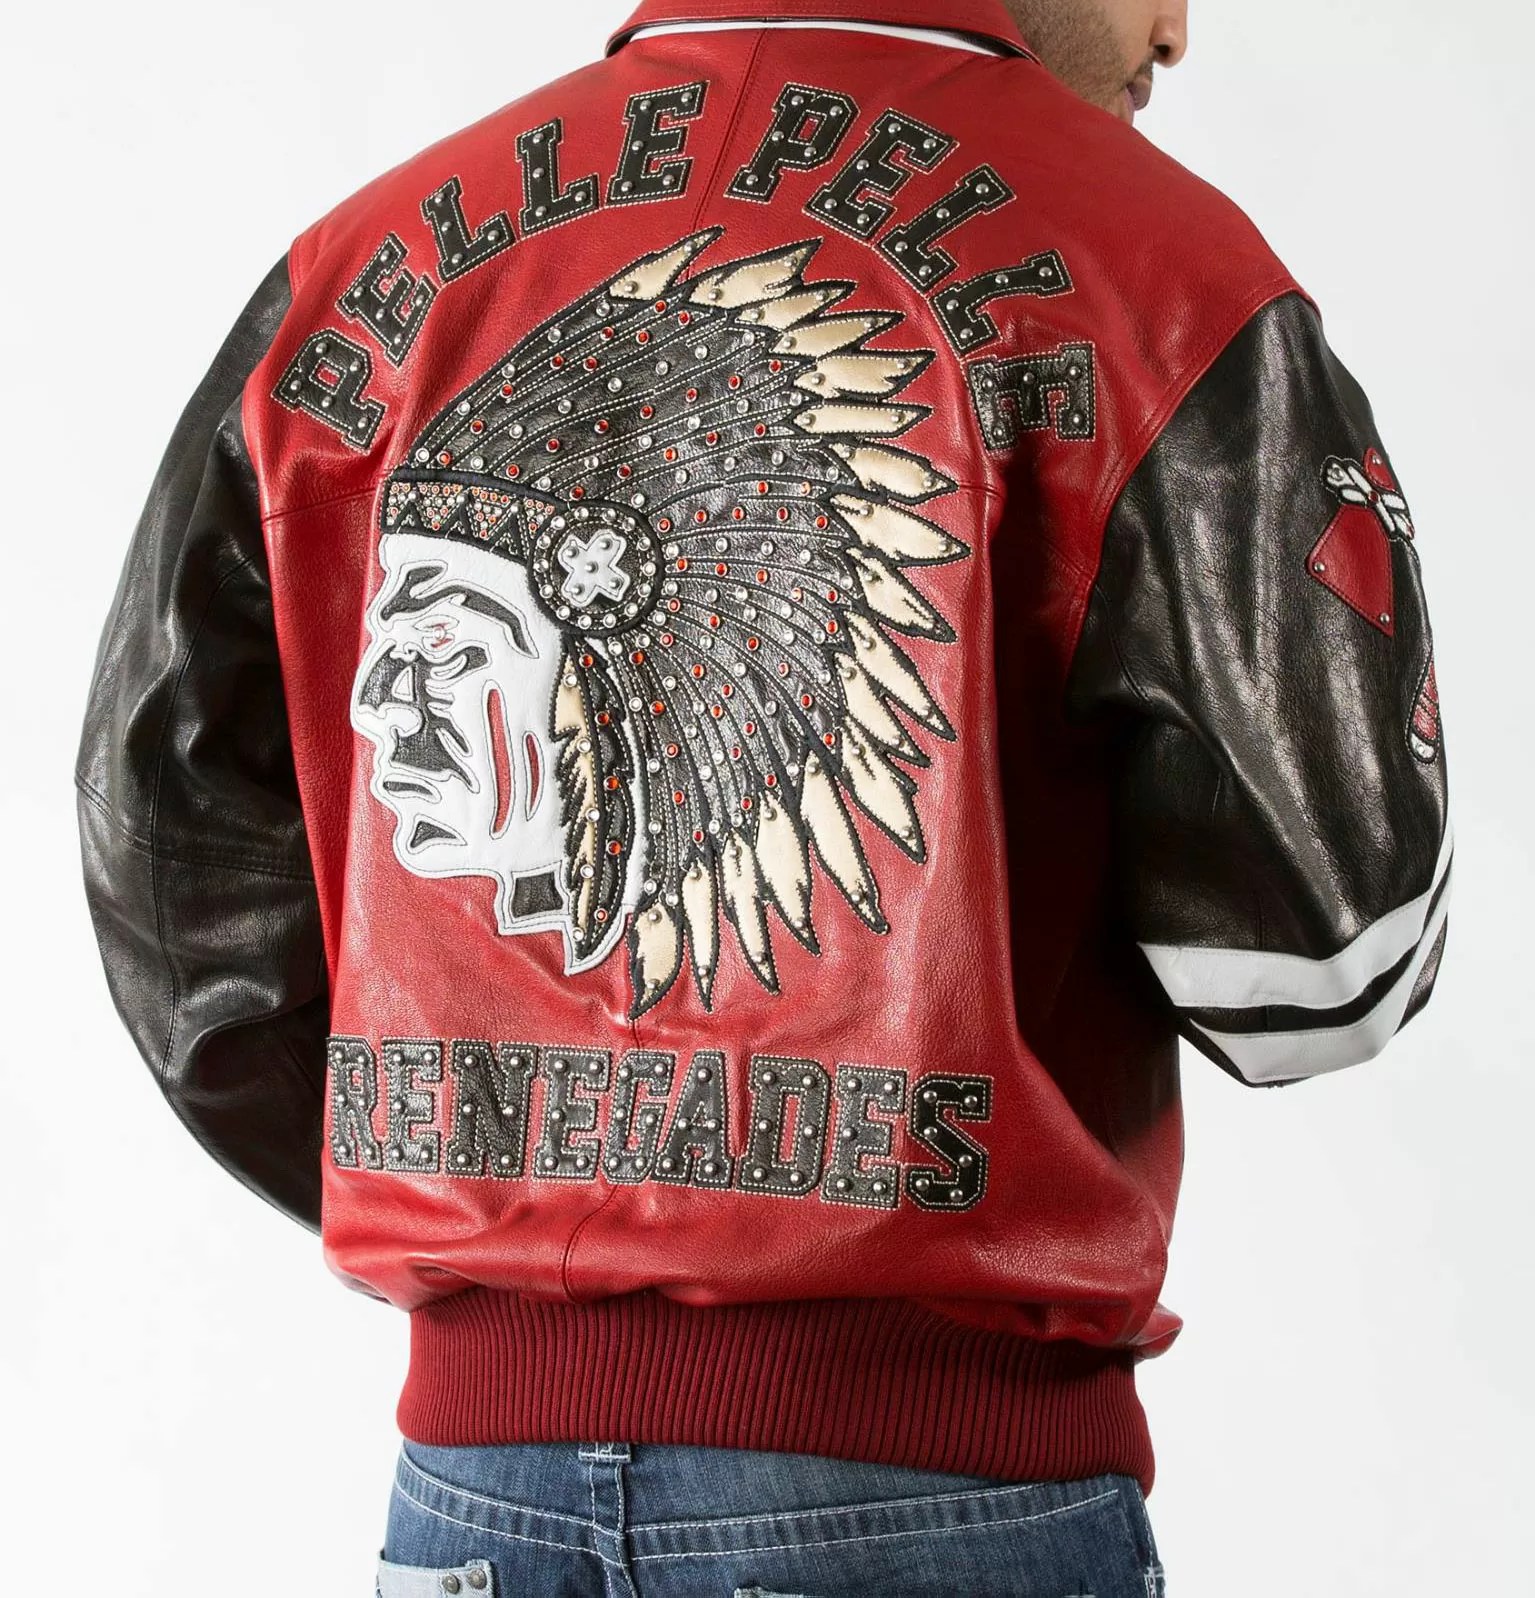 Pelle-Pelle-Indian-Renegades-Fire-Red-Leather-Jacket-.jpg